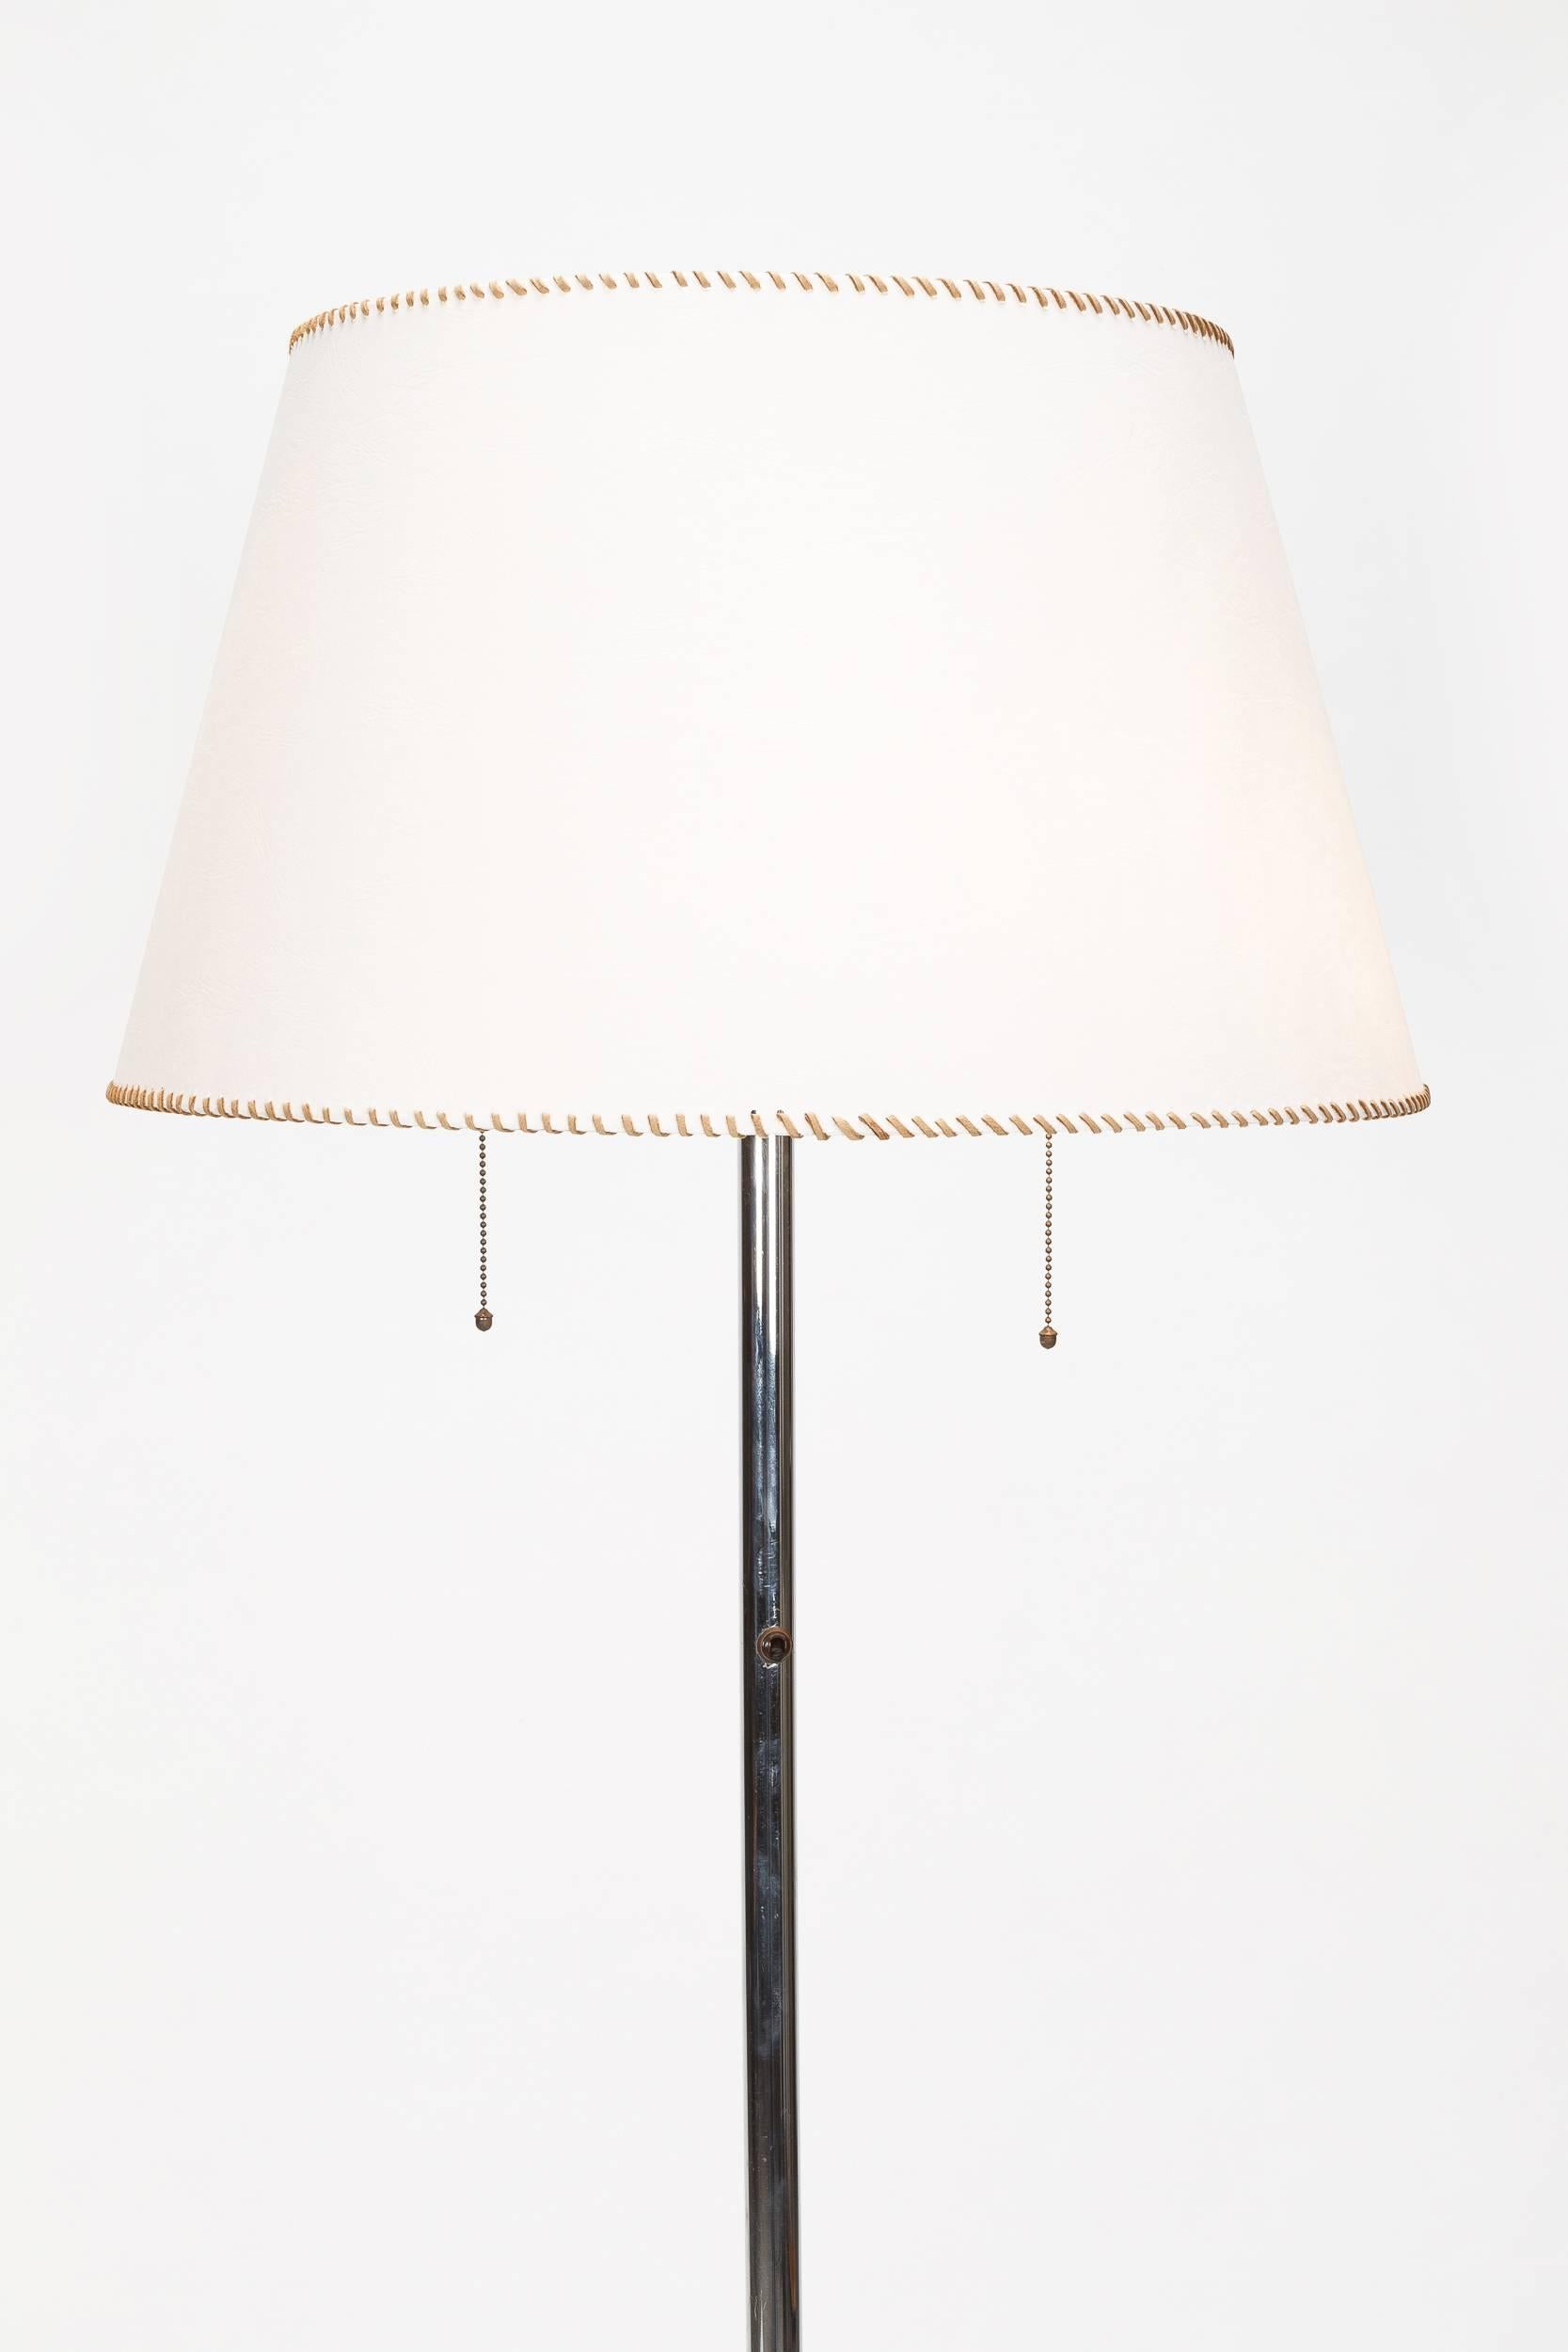 German Floor Lamp Bauhaus, 1930s For Sale